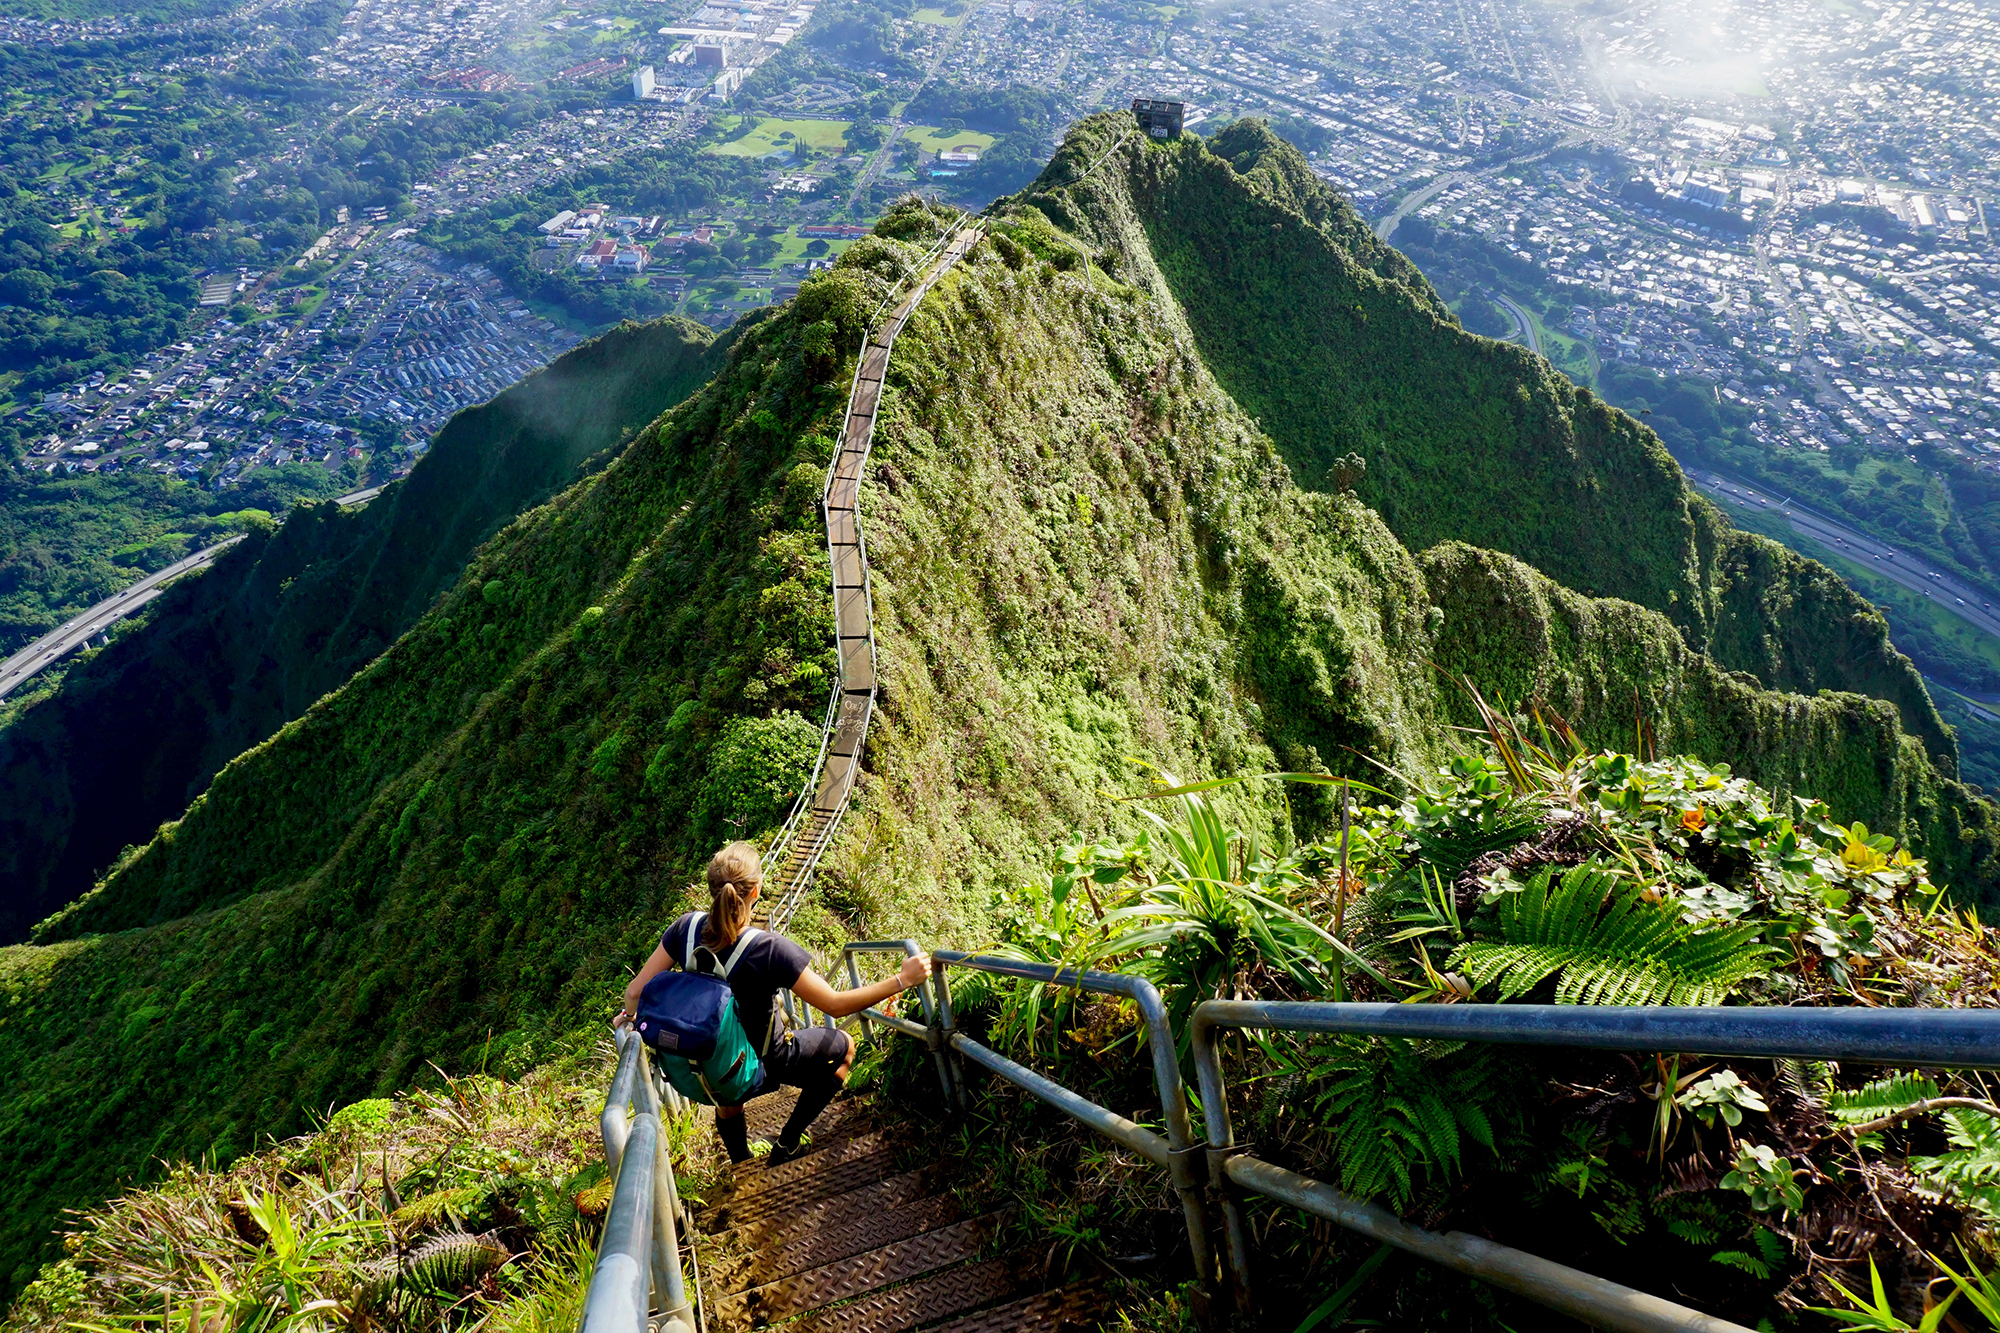 Discover “Haiku Stairs”, an extreme hike in Hawaii